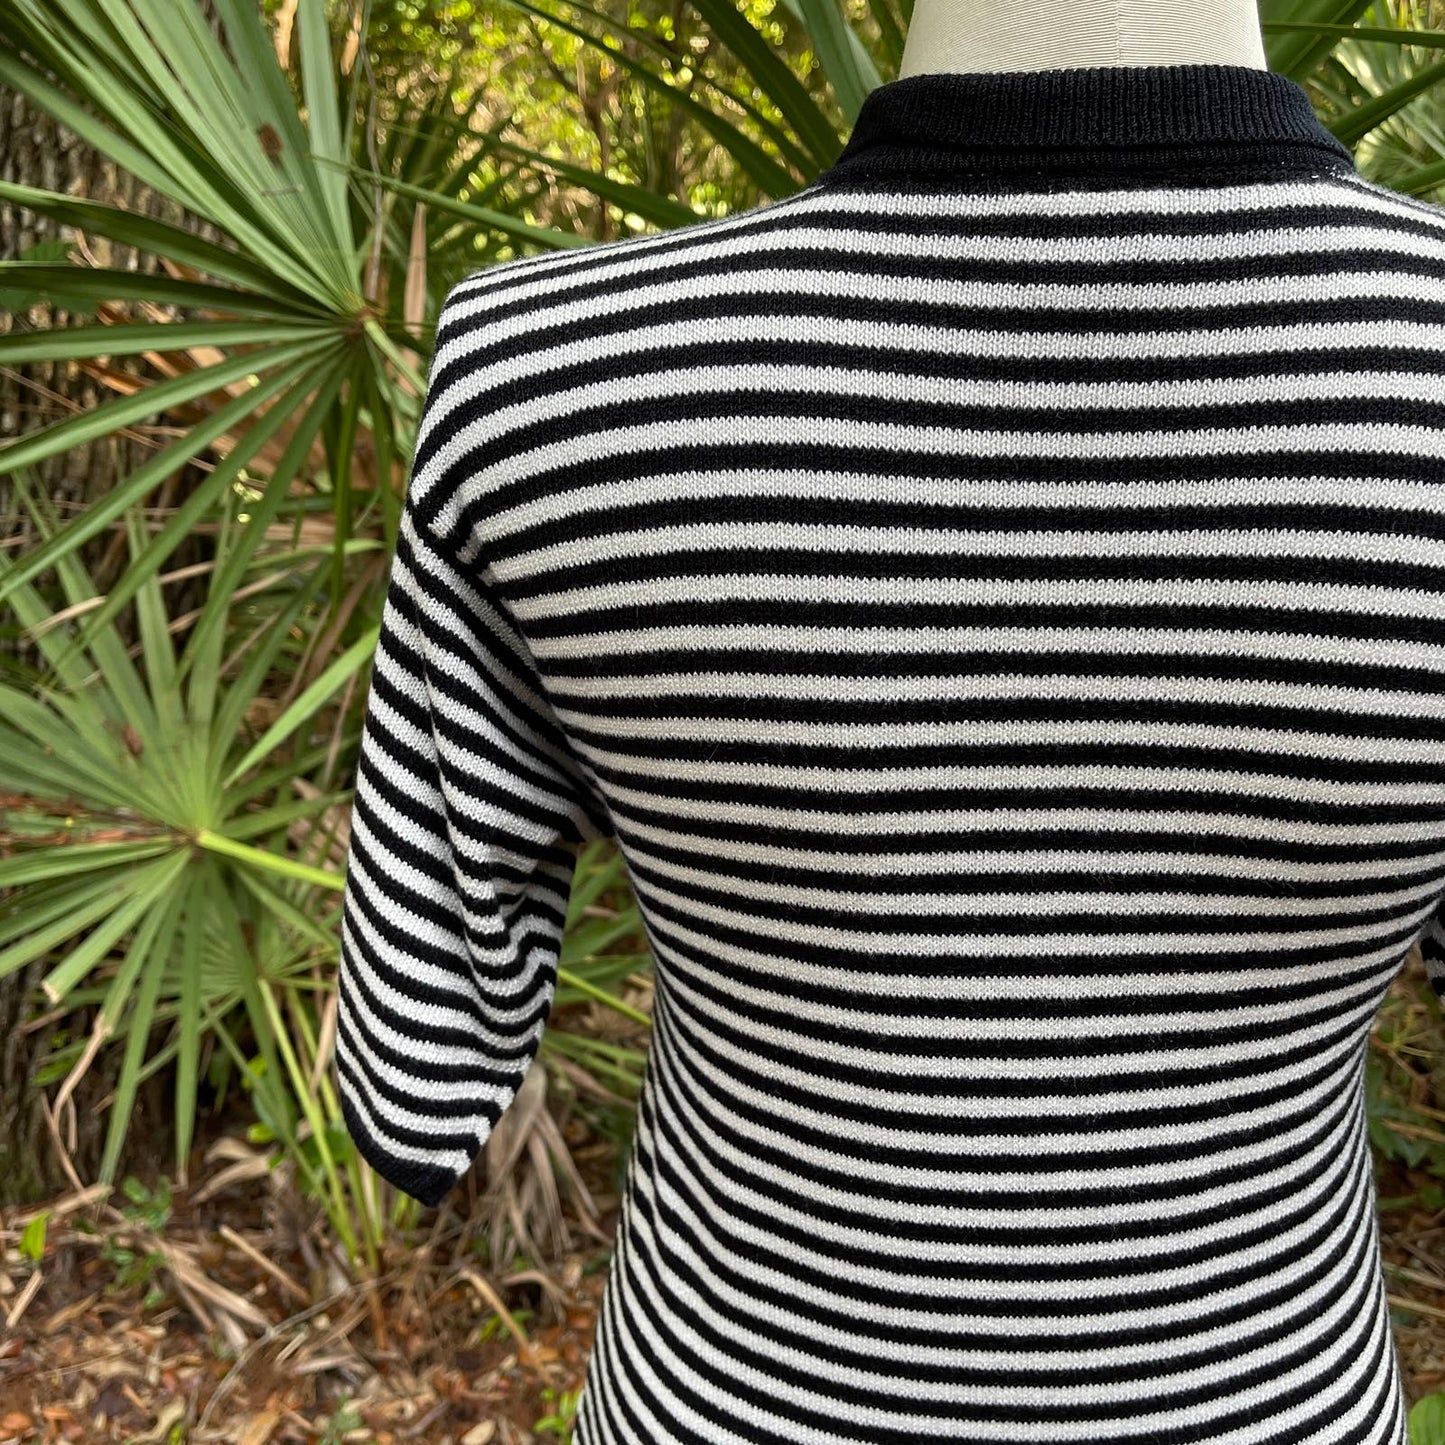 Vintage 90s Knit Dress Shorts Sleeve Black White Striped Liz Claiborne Size M